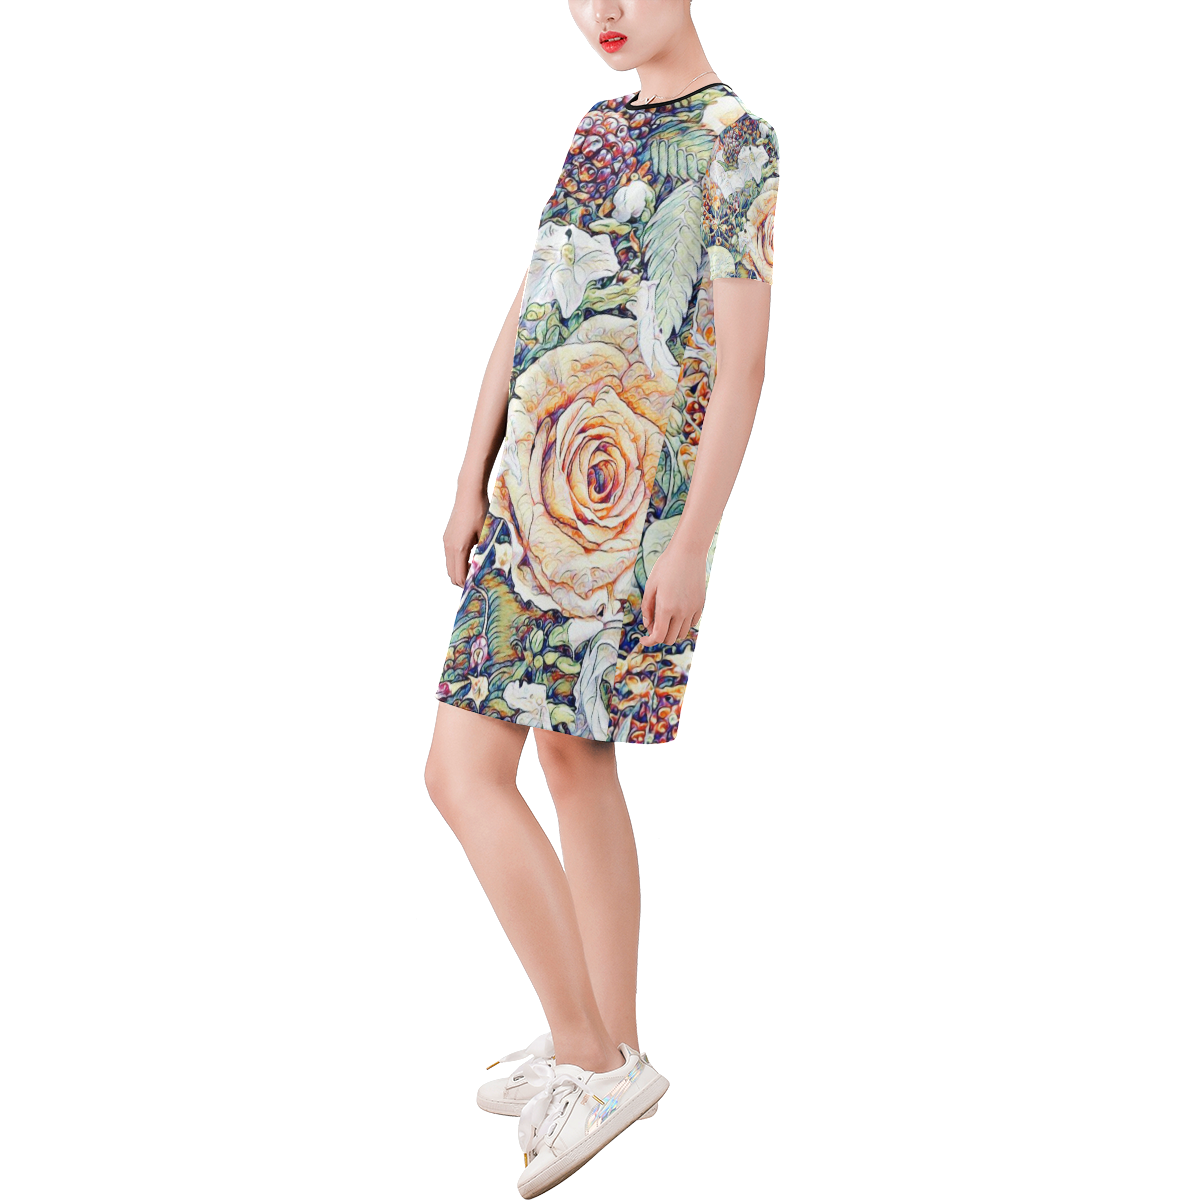 Impression Floral 10191 by JamColors Short-Sleeve Round Neck A-Line Dress (Model D47)